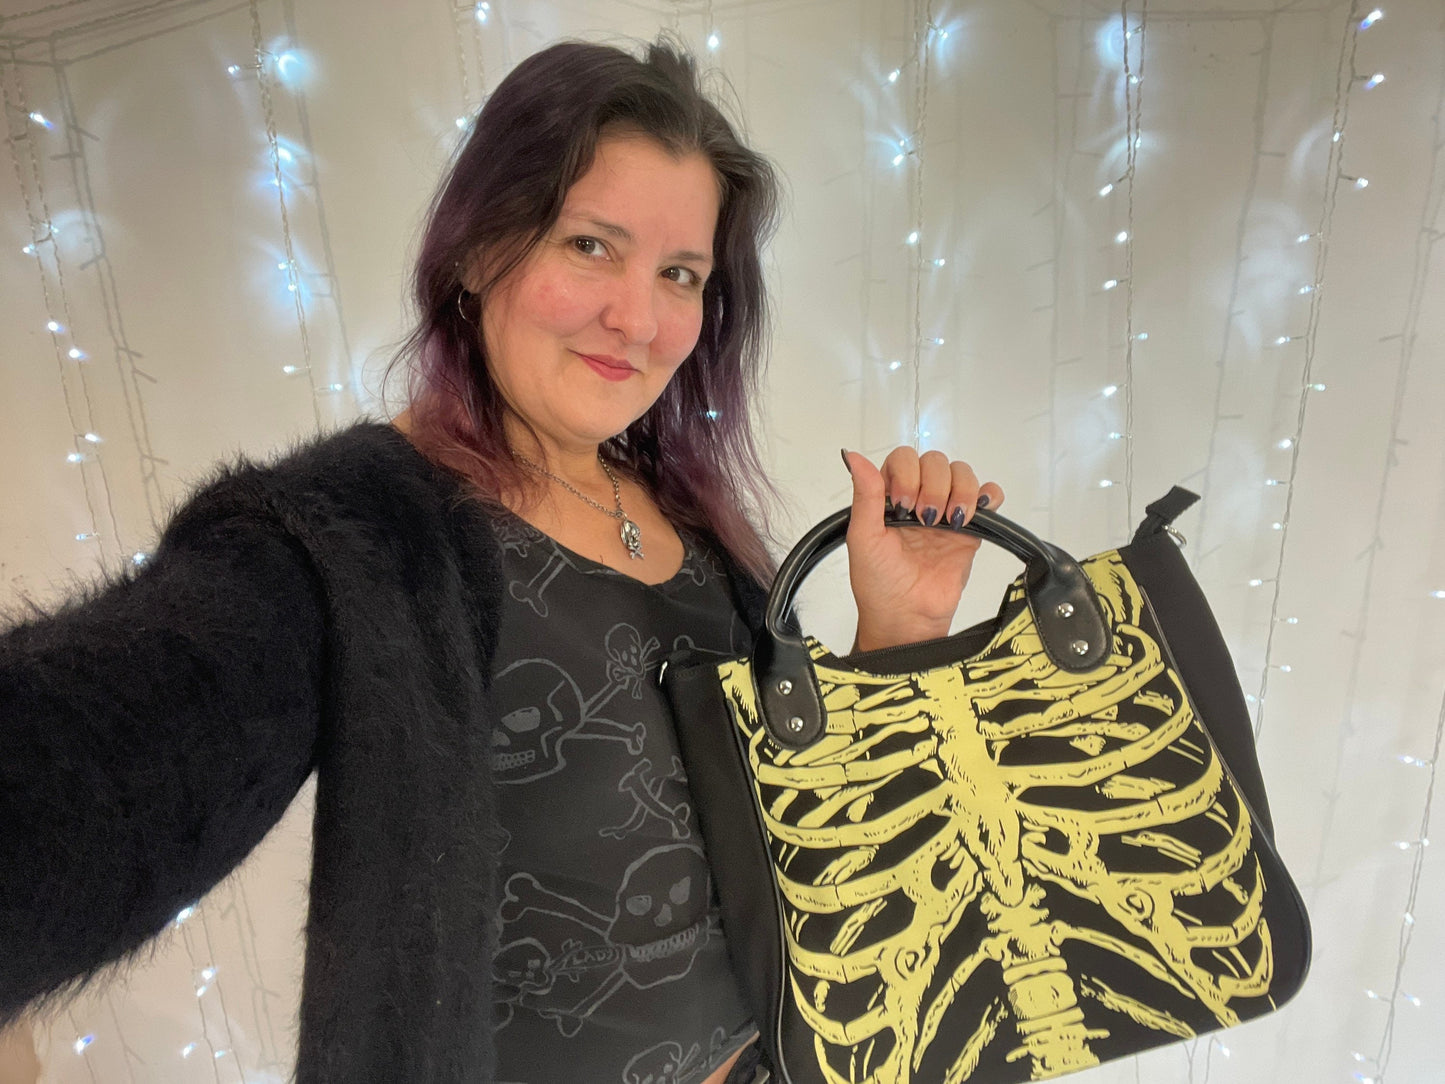 Goth Skeleton Rib Cage Purse Handbag